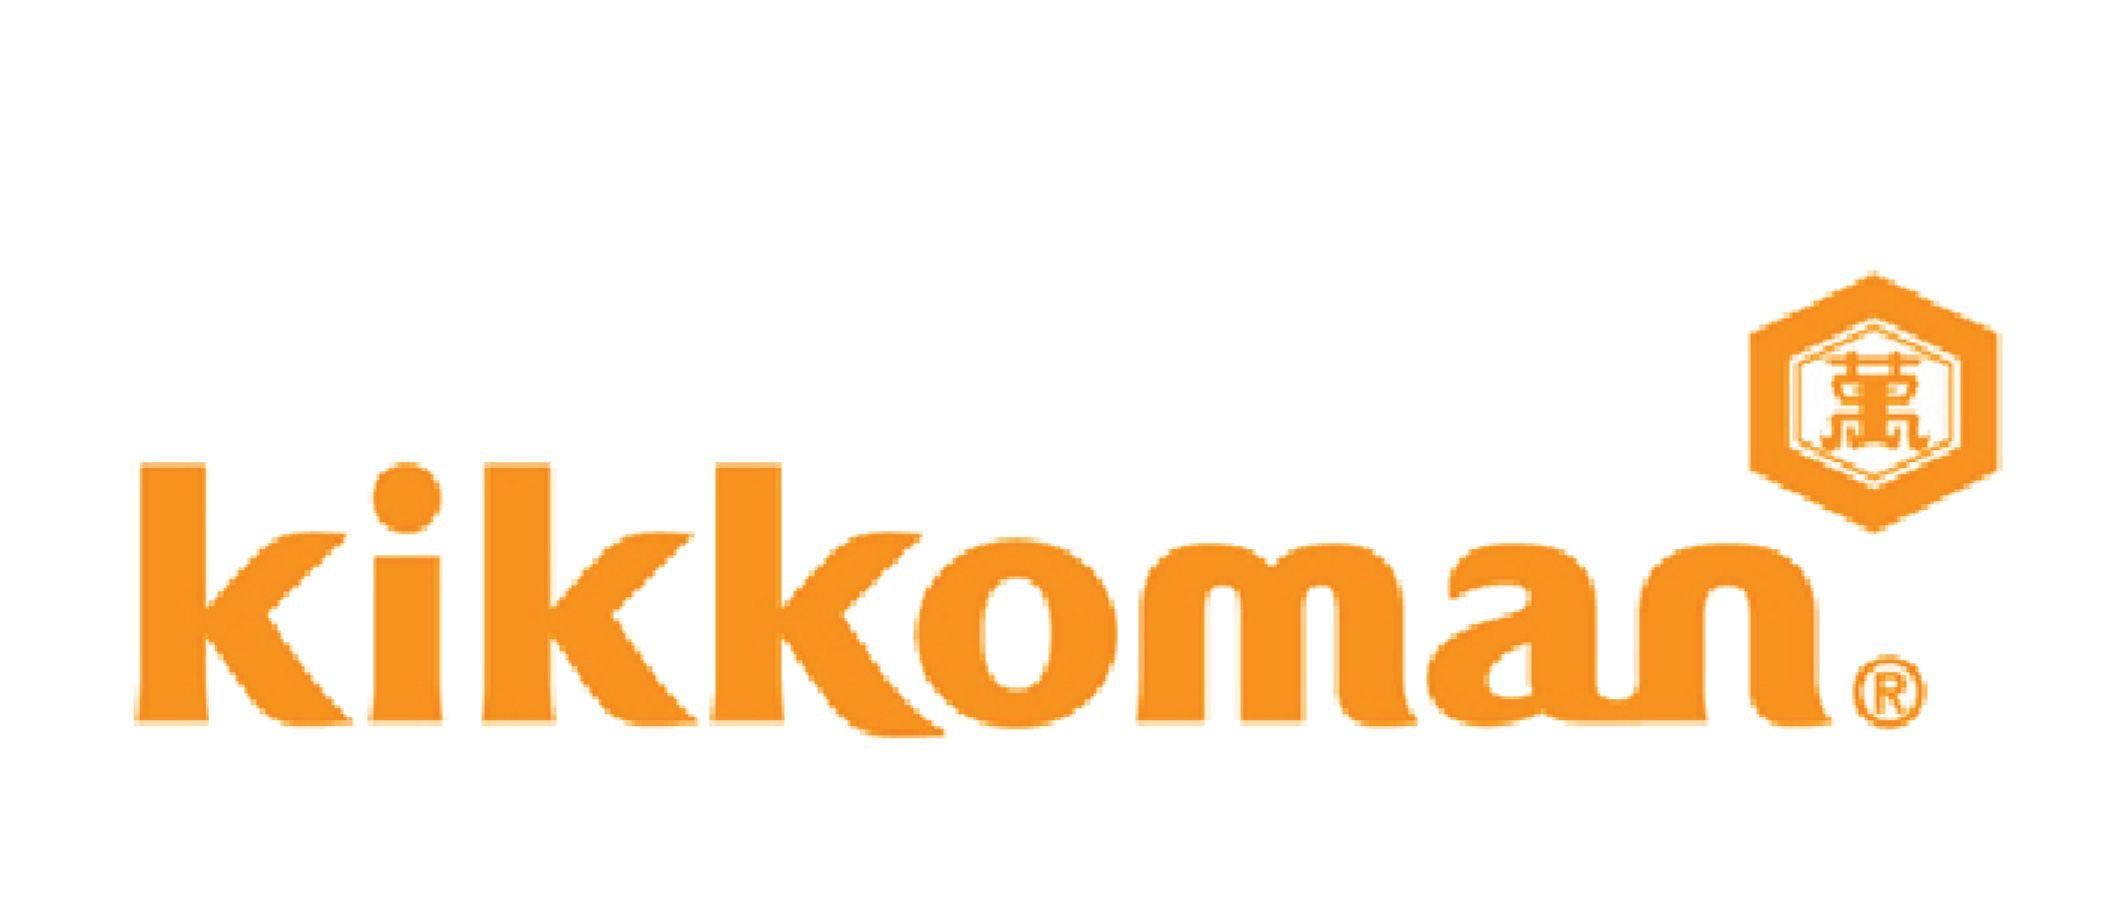 Kikkoman Logo - Index of /wp-content/uploads/2014/10